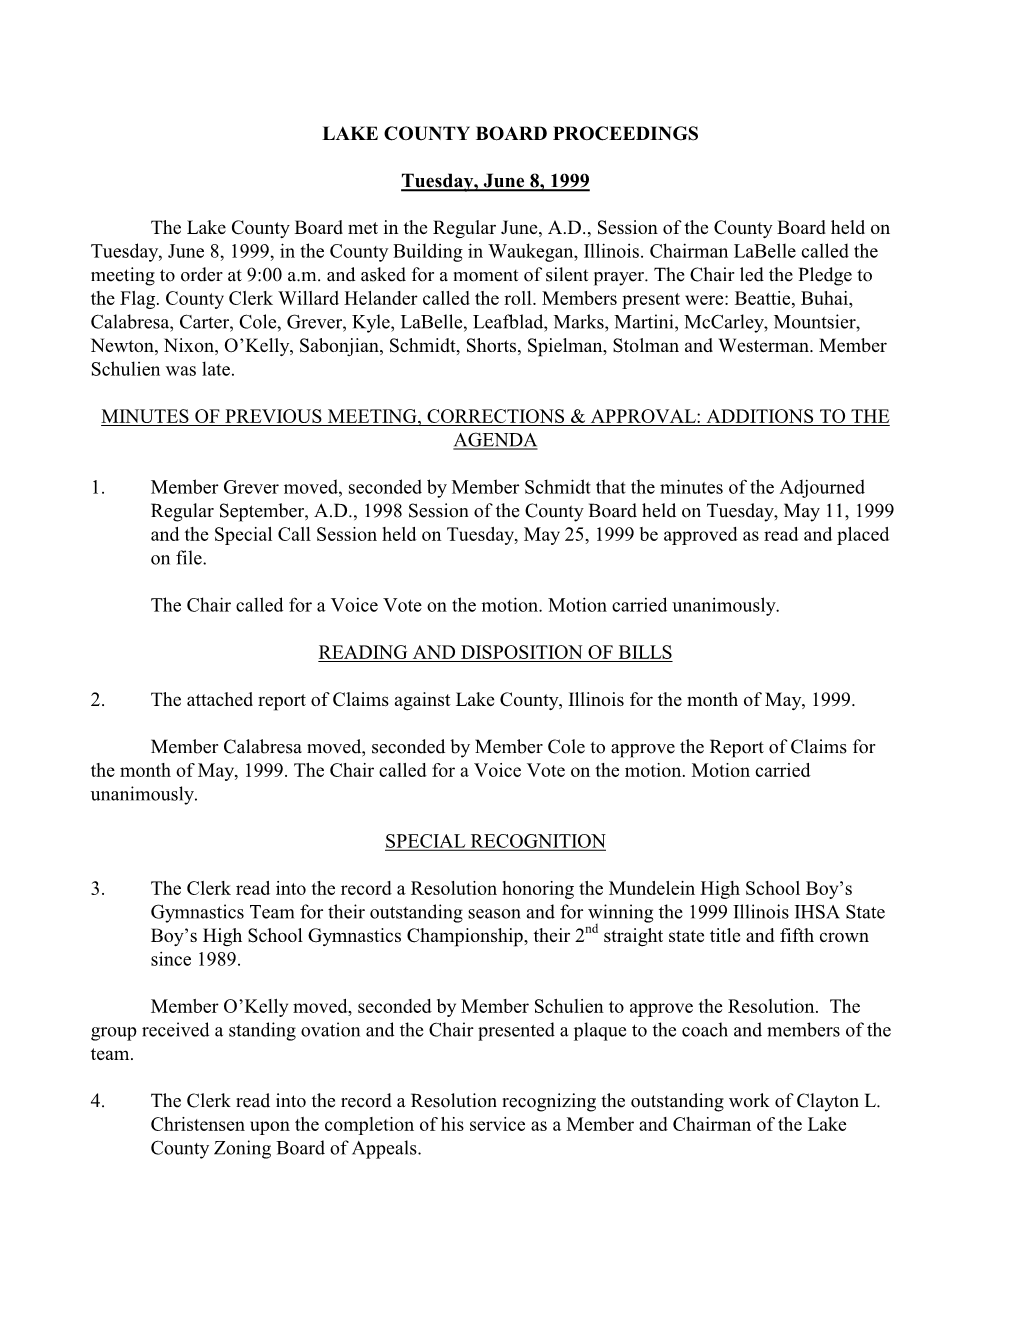 Lake County Board Proceedings Tuesday, June 08, 1999